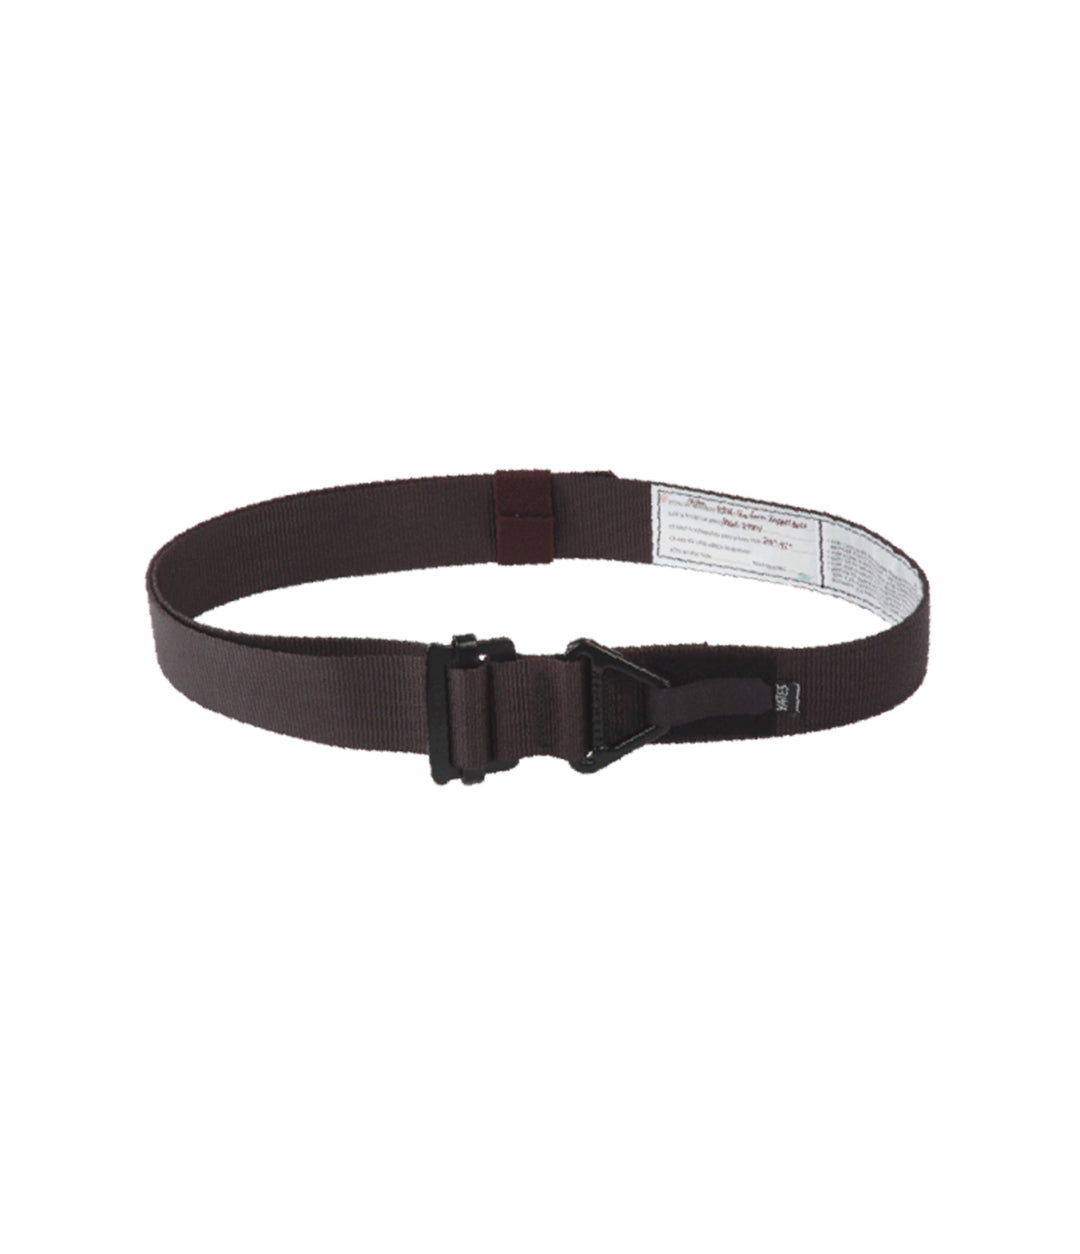 1.75 inch Uniform Rappel Belt